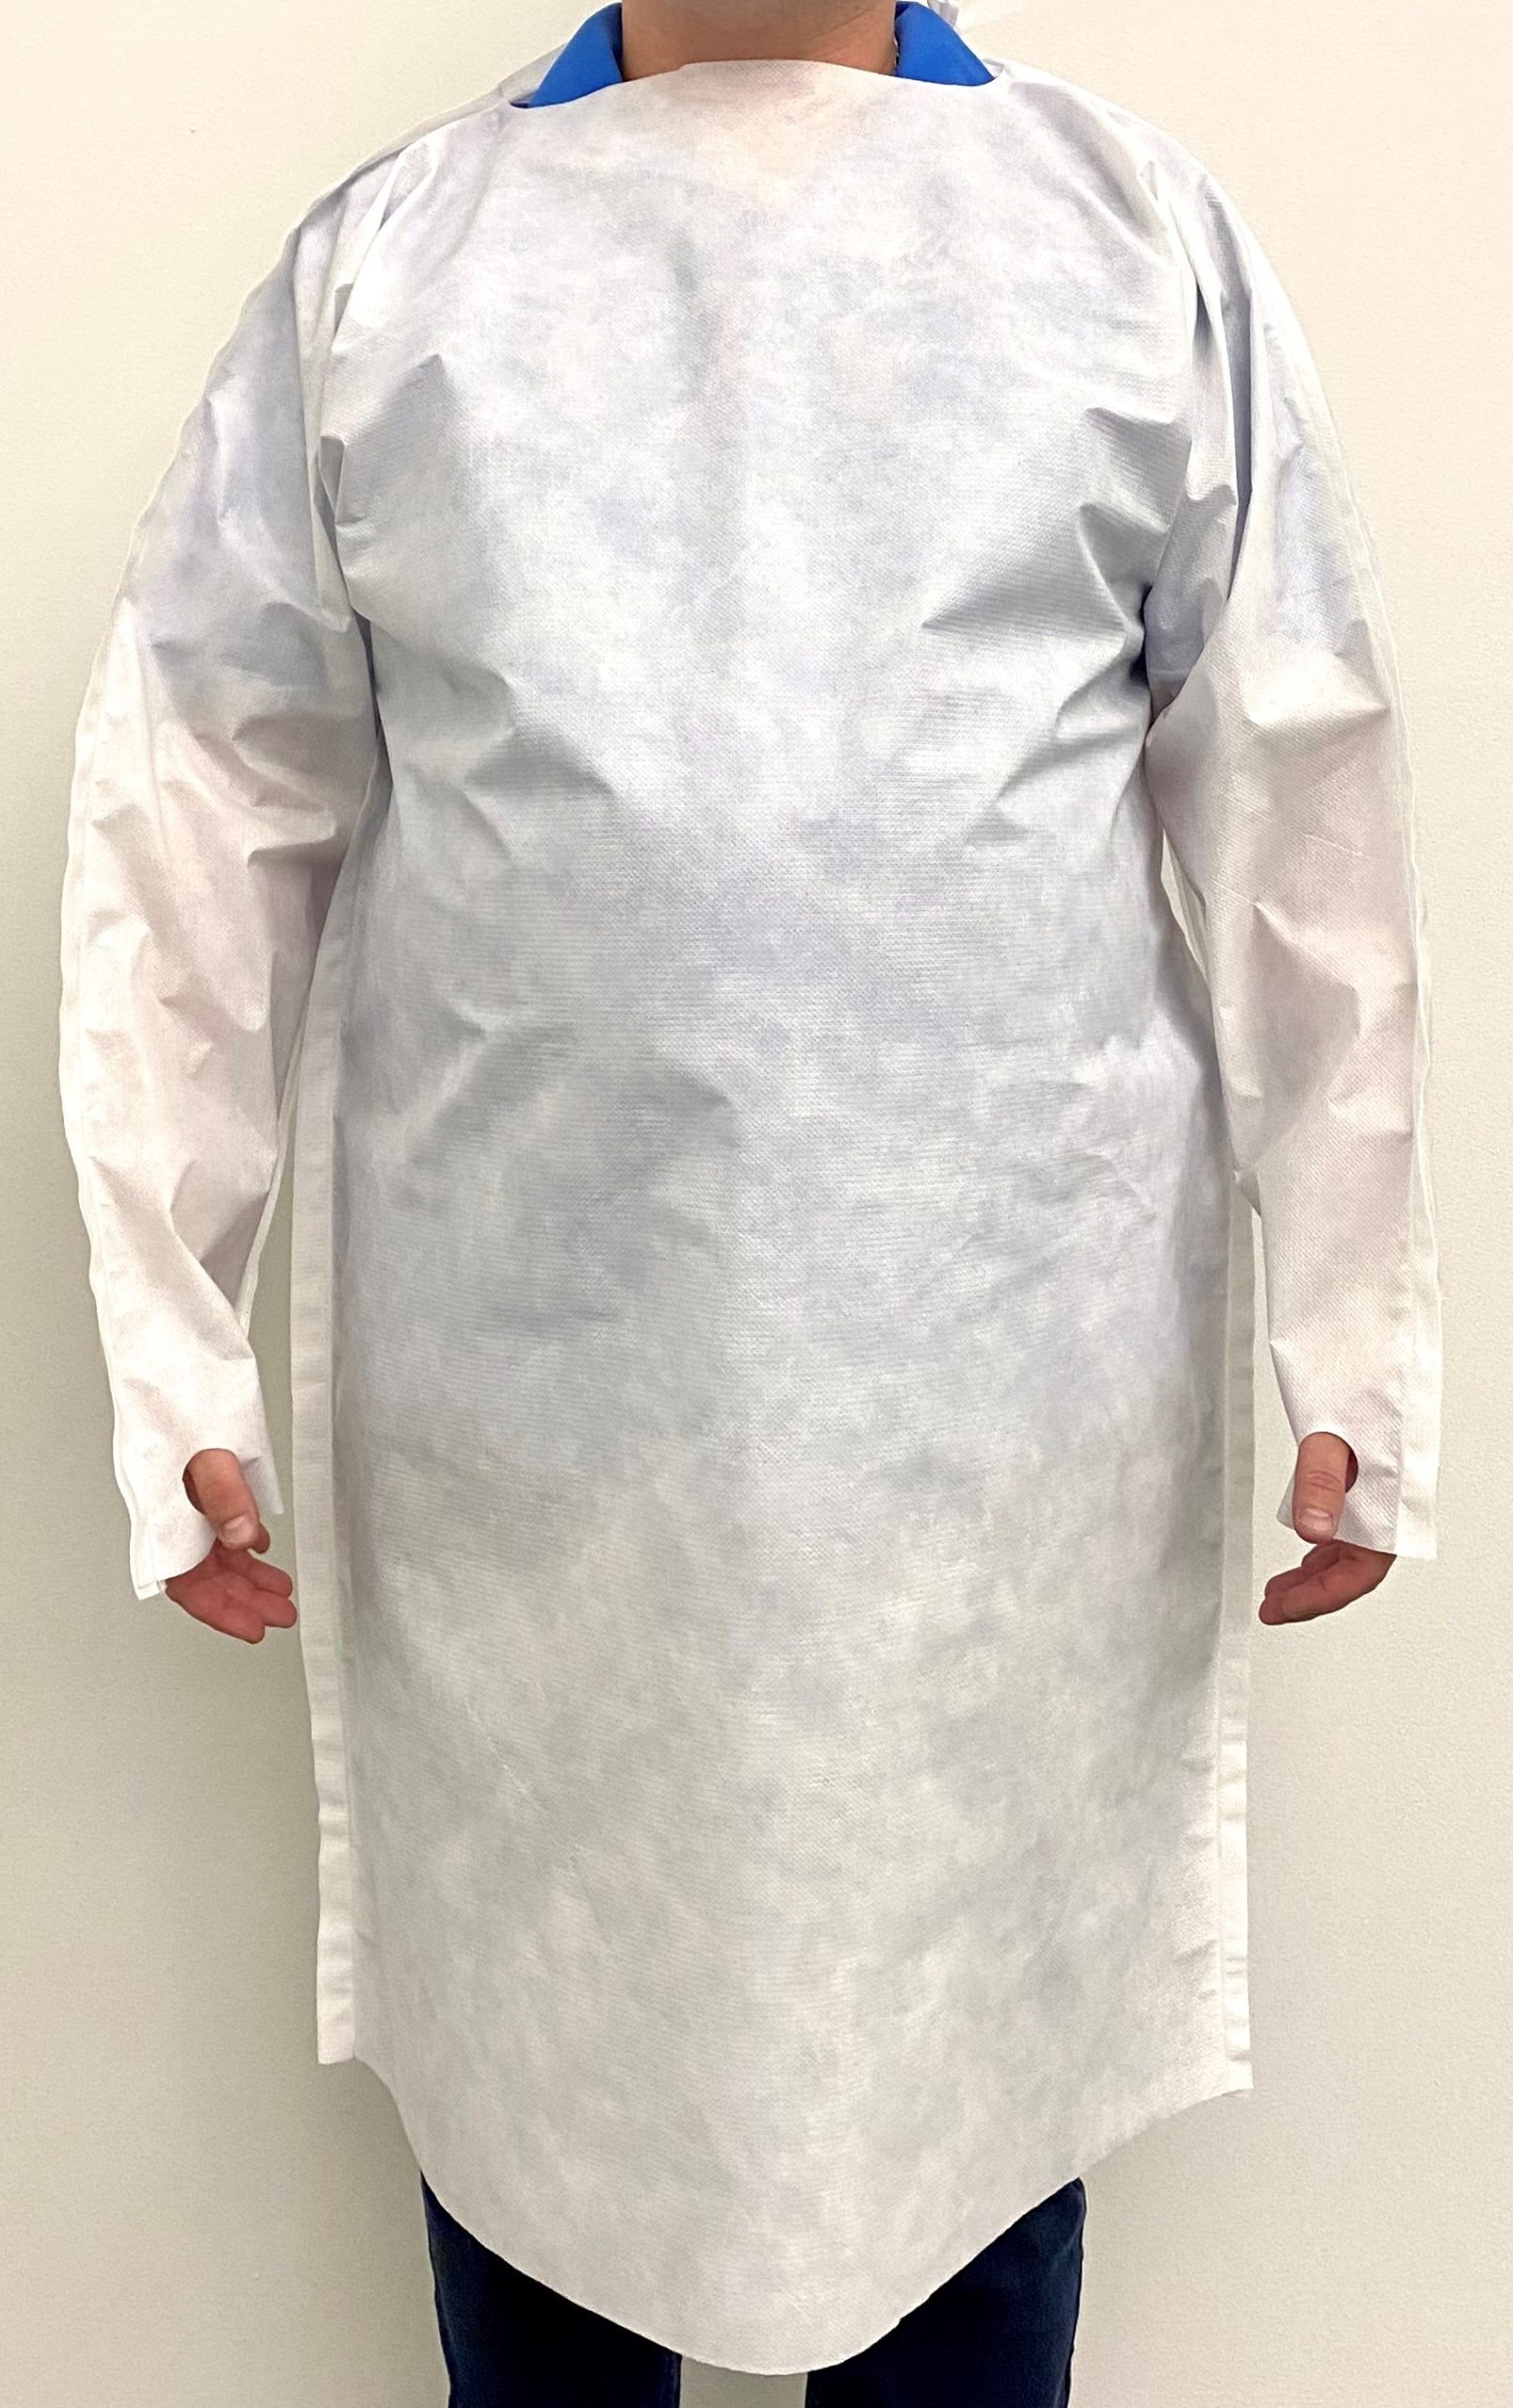 SGL2021 Shawmut Protex™ Single-Use AAMI Level 2 Closed Back Style Spunbond Polypropylene White Isolation Gowns with Thumb Holes